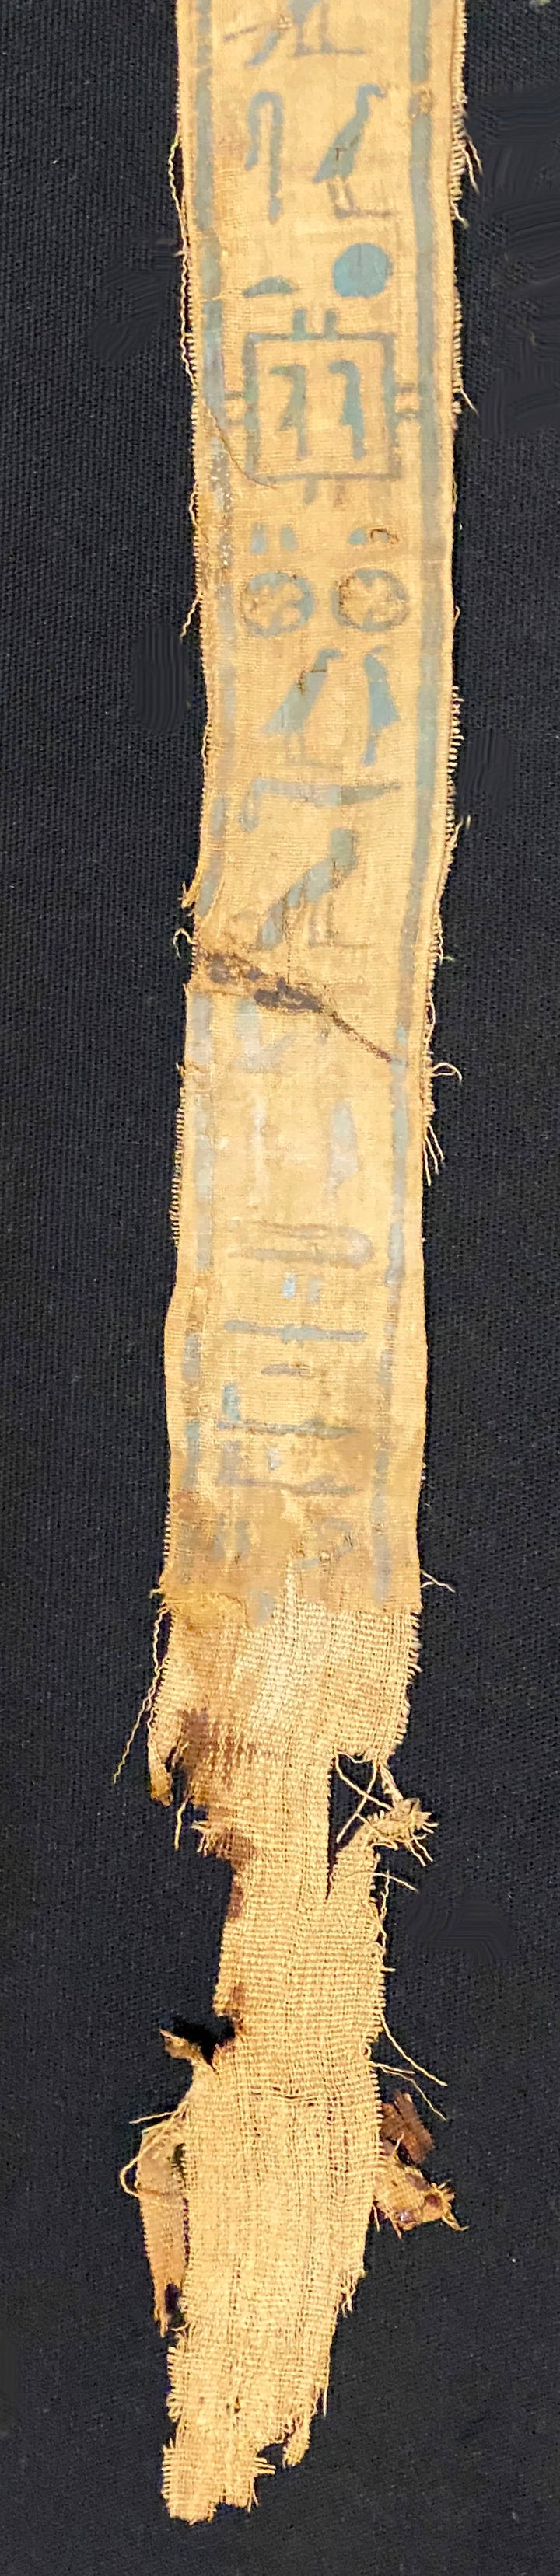 Egyptian Hieroglyphic Painted Linen Mummy Bandage